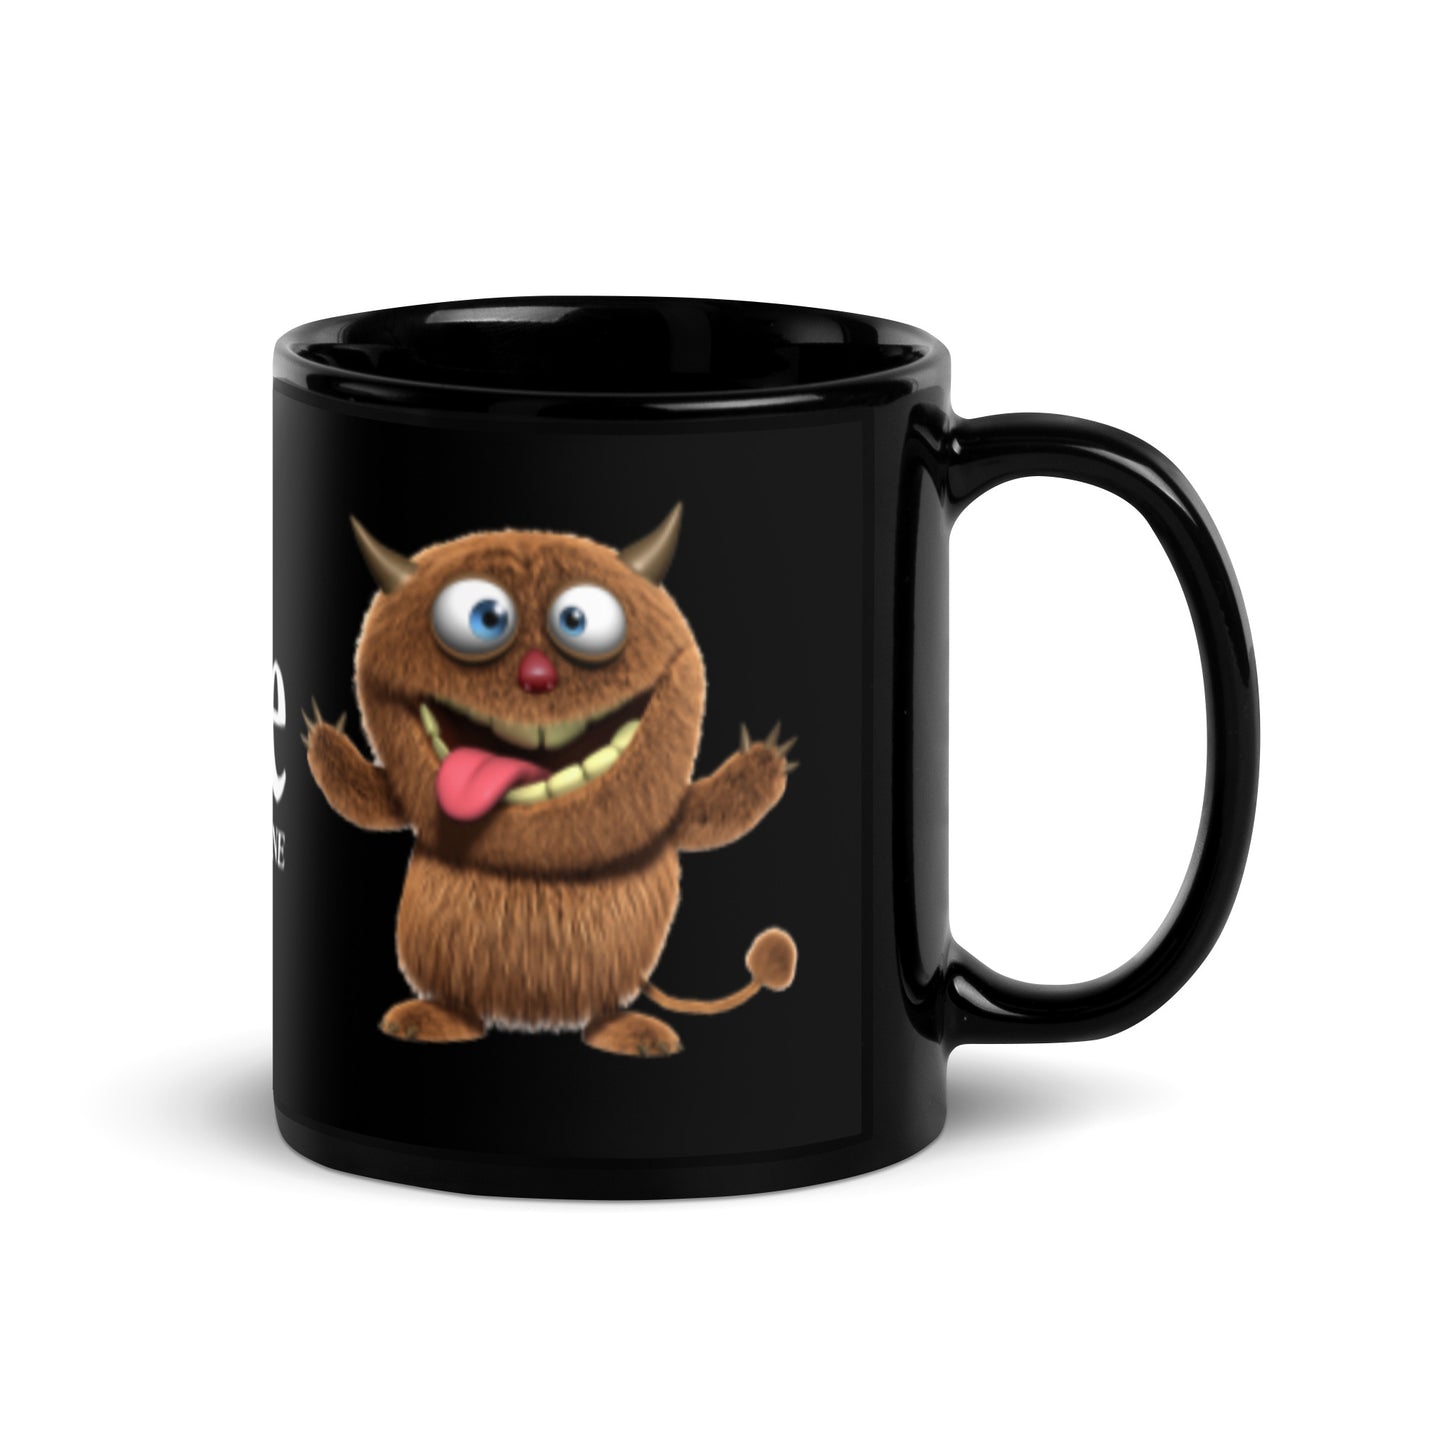 Wake-Up Smiling THUMPER & PULPHOUSE GLOSSY BLACK MUG - Goofy Coffee Tea Mug Fun & Humorous